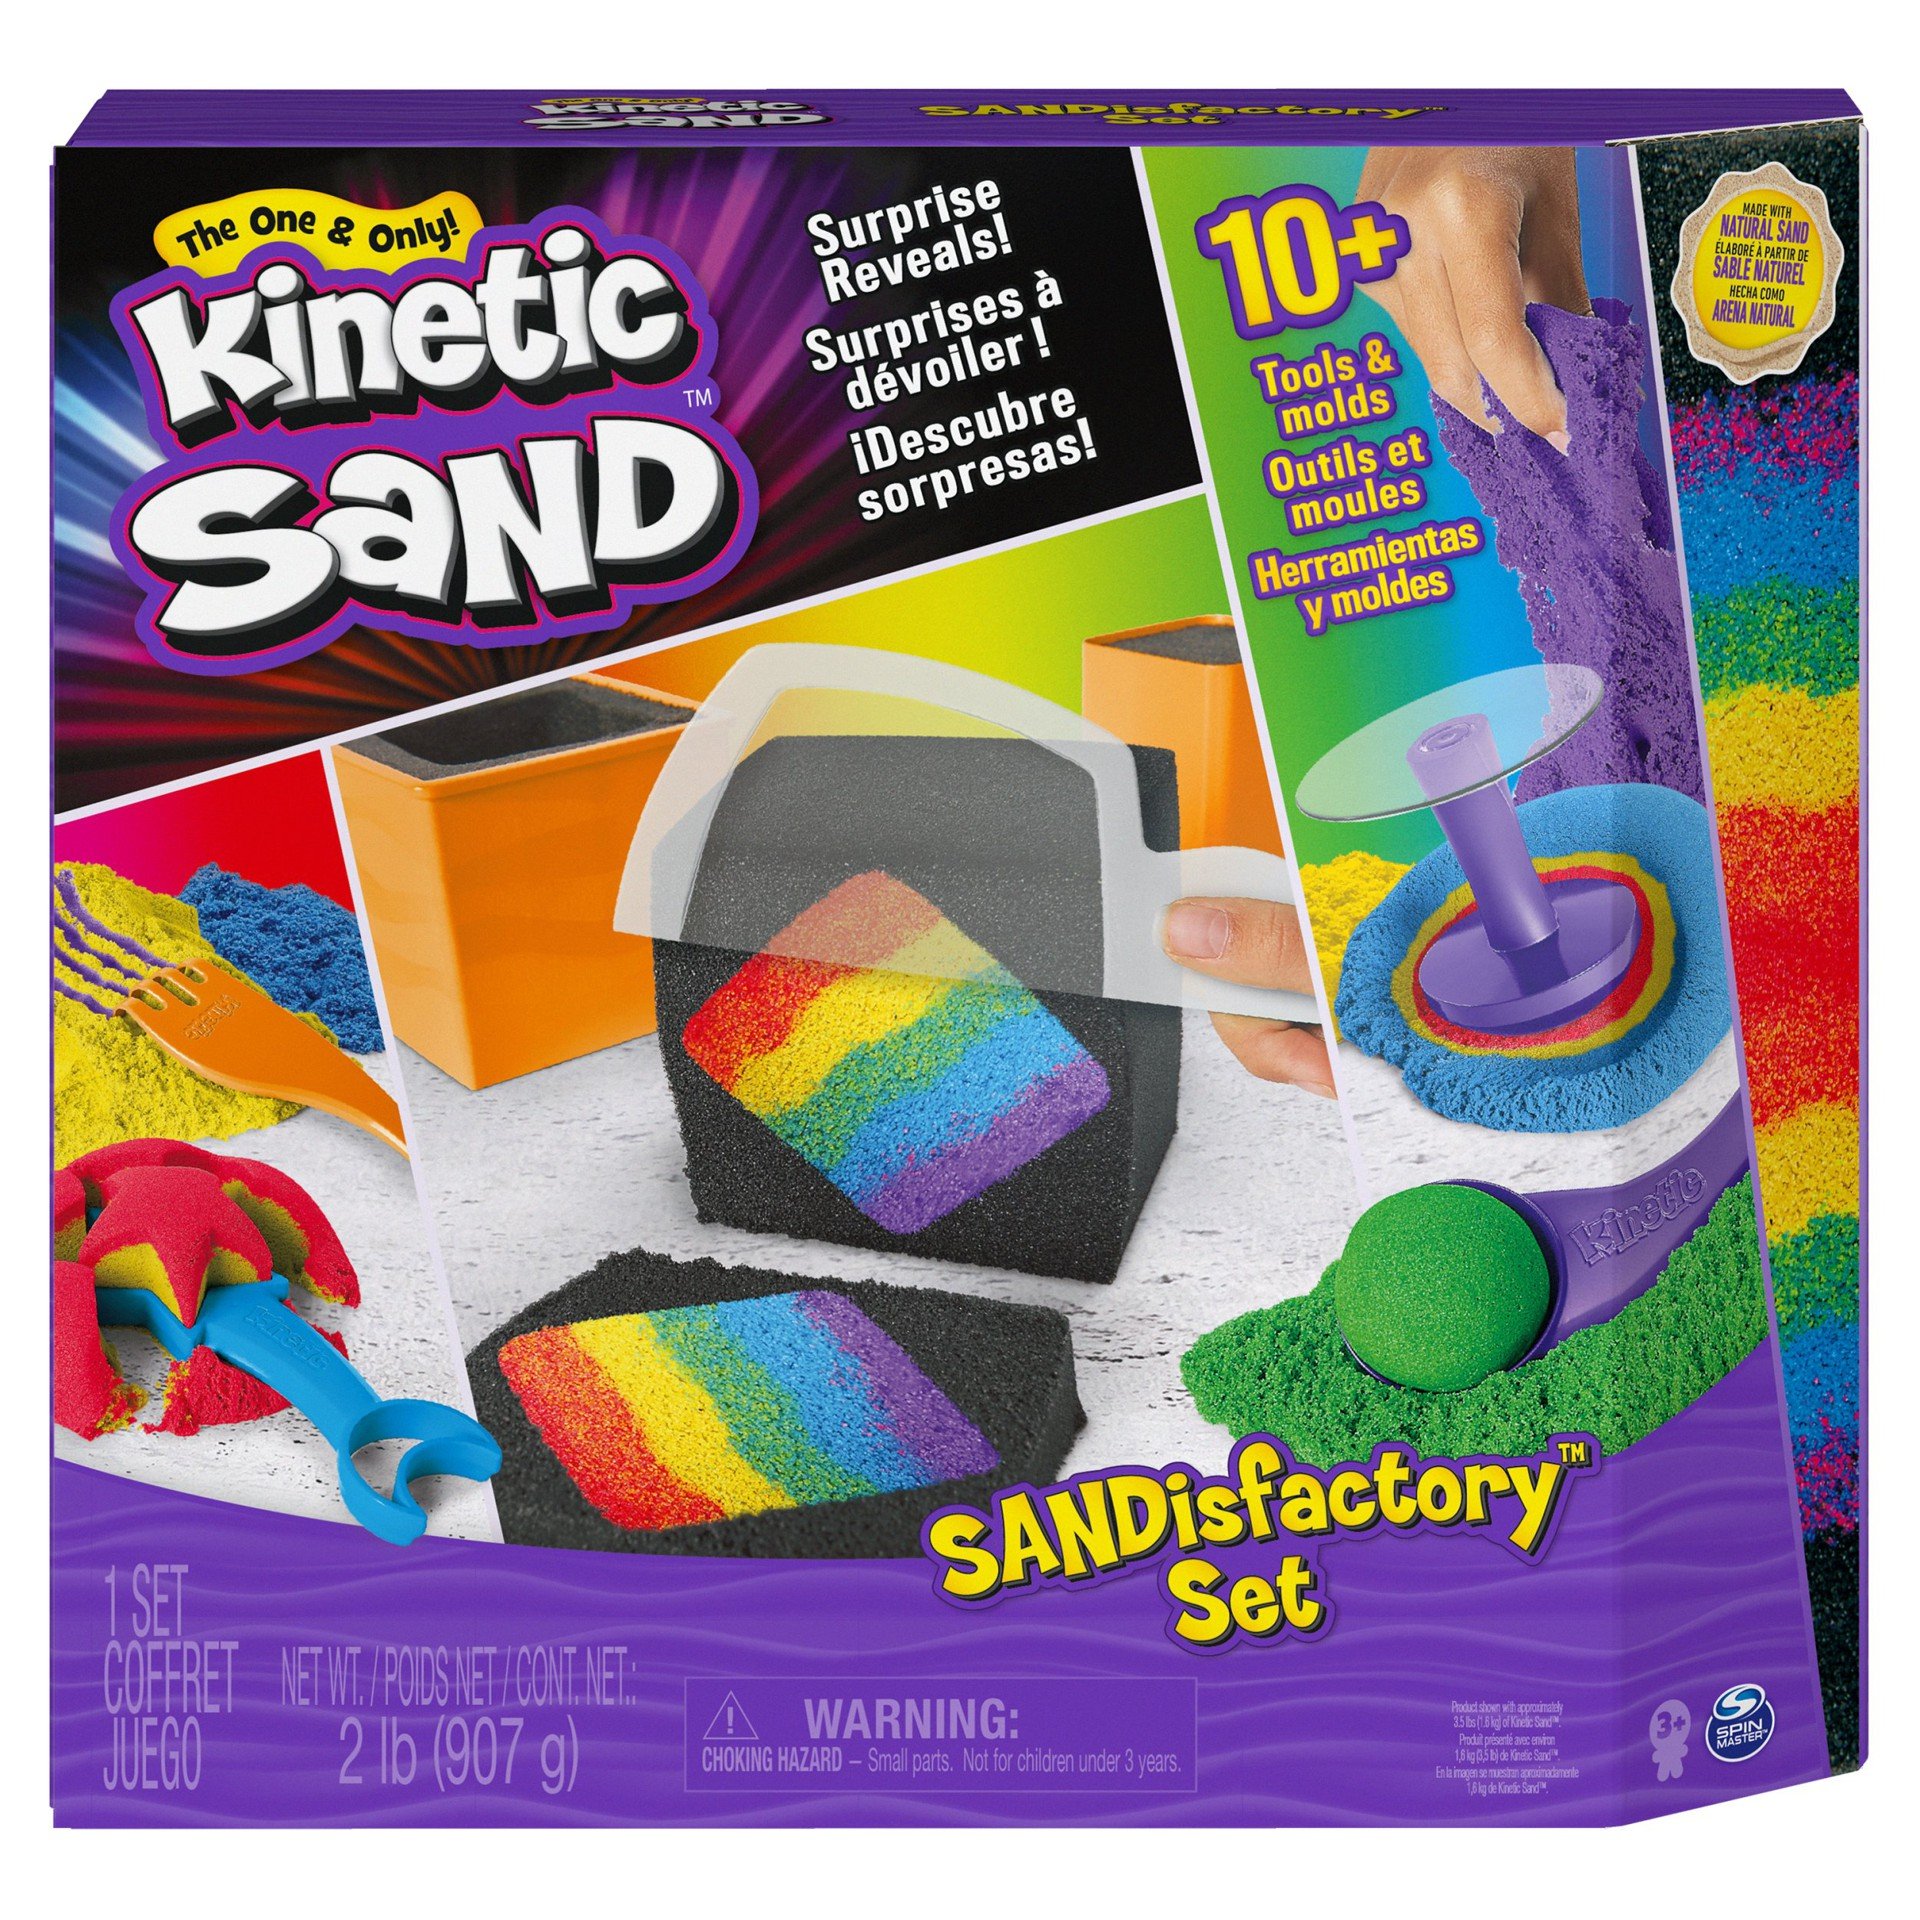 Kinectic Sand Sandisfactory Sæt